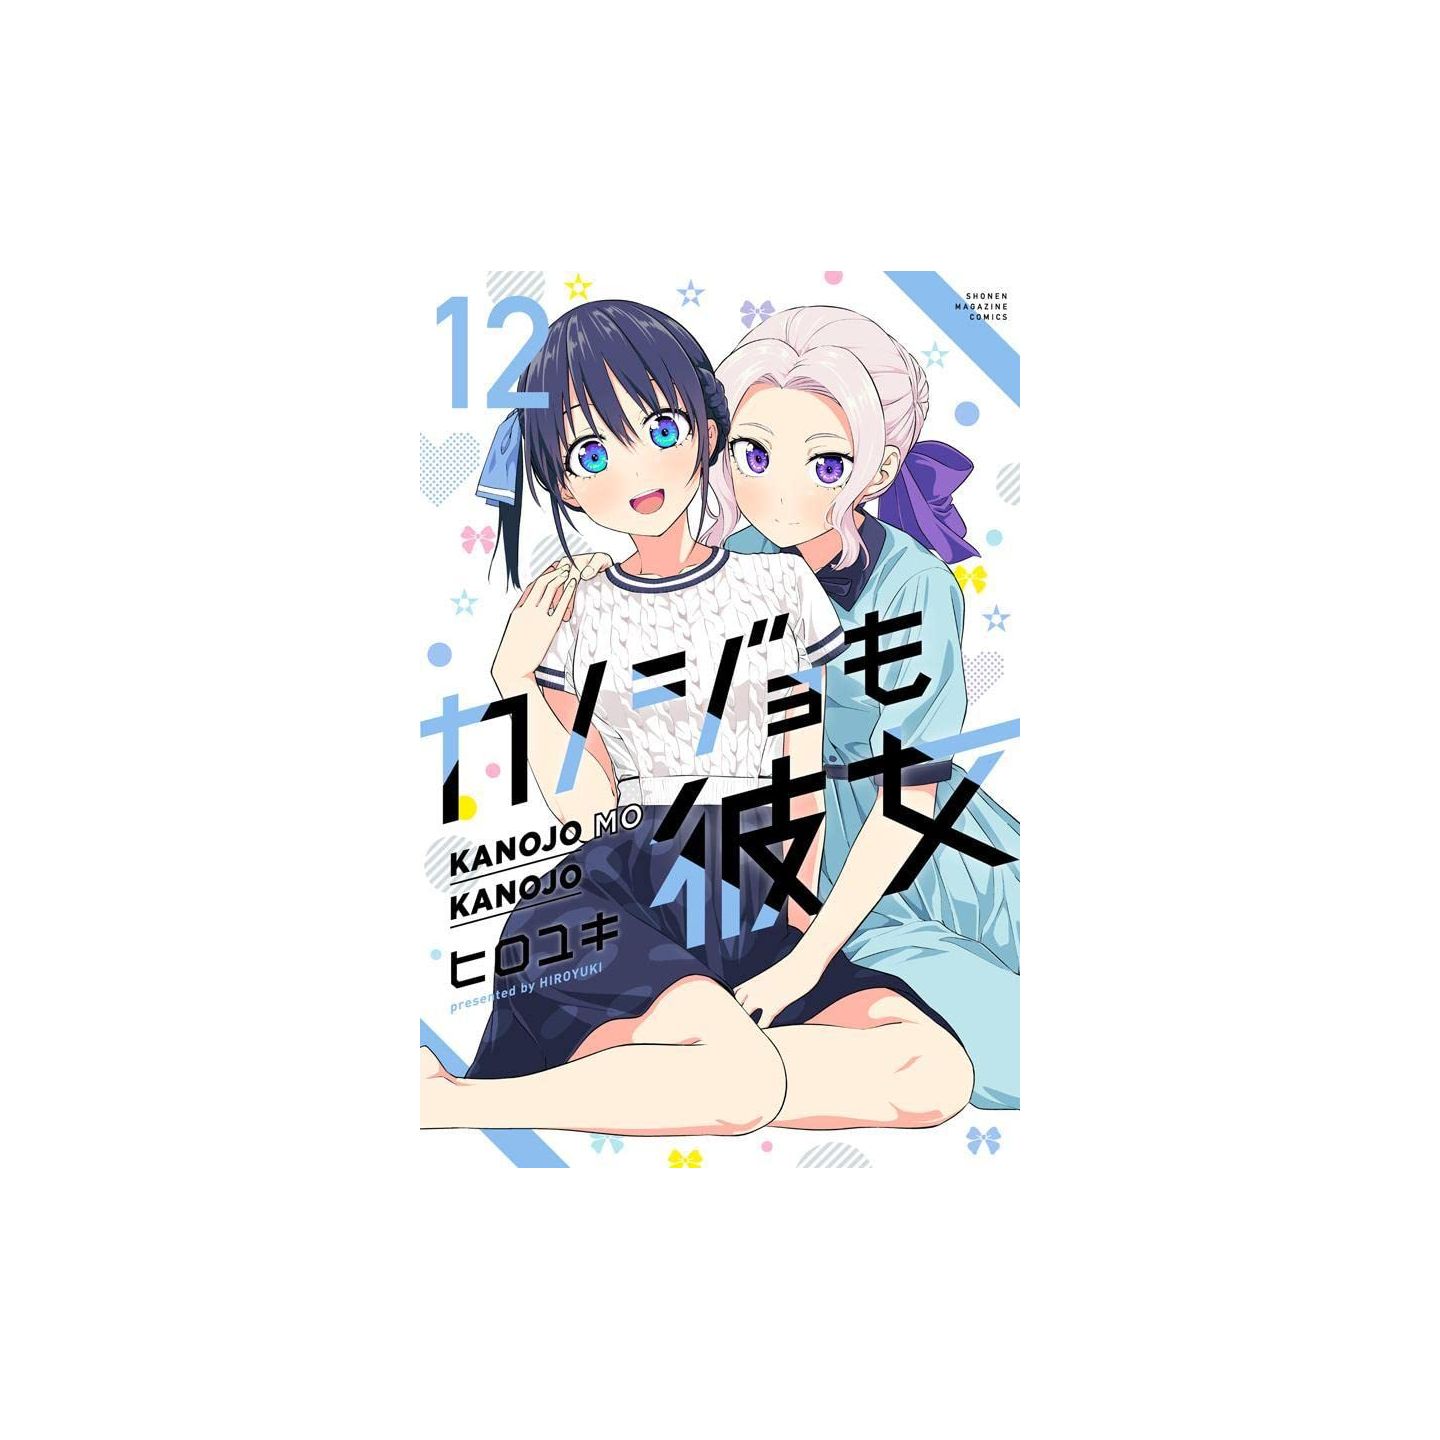 Girlfriend, Girlfriend, Vol. 1 by Hiroyuki